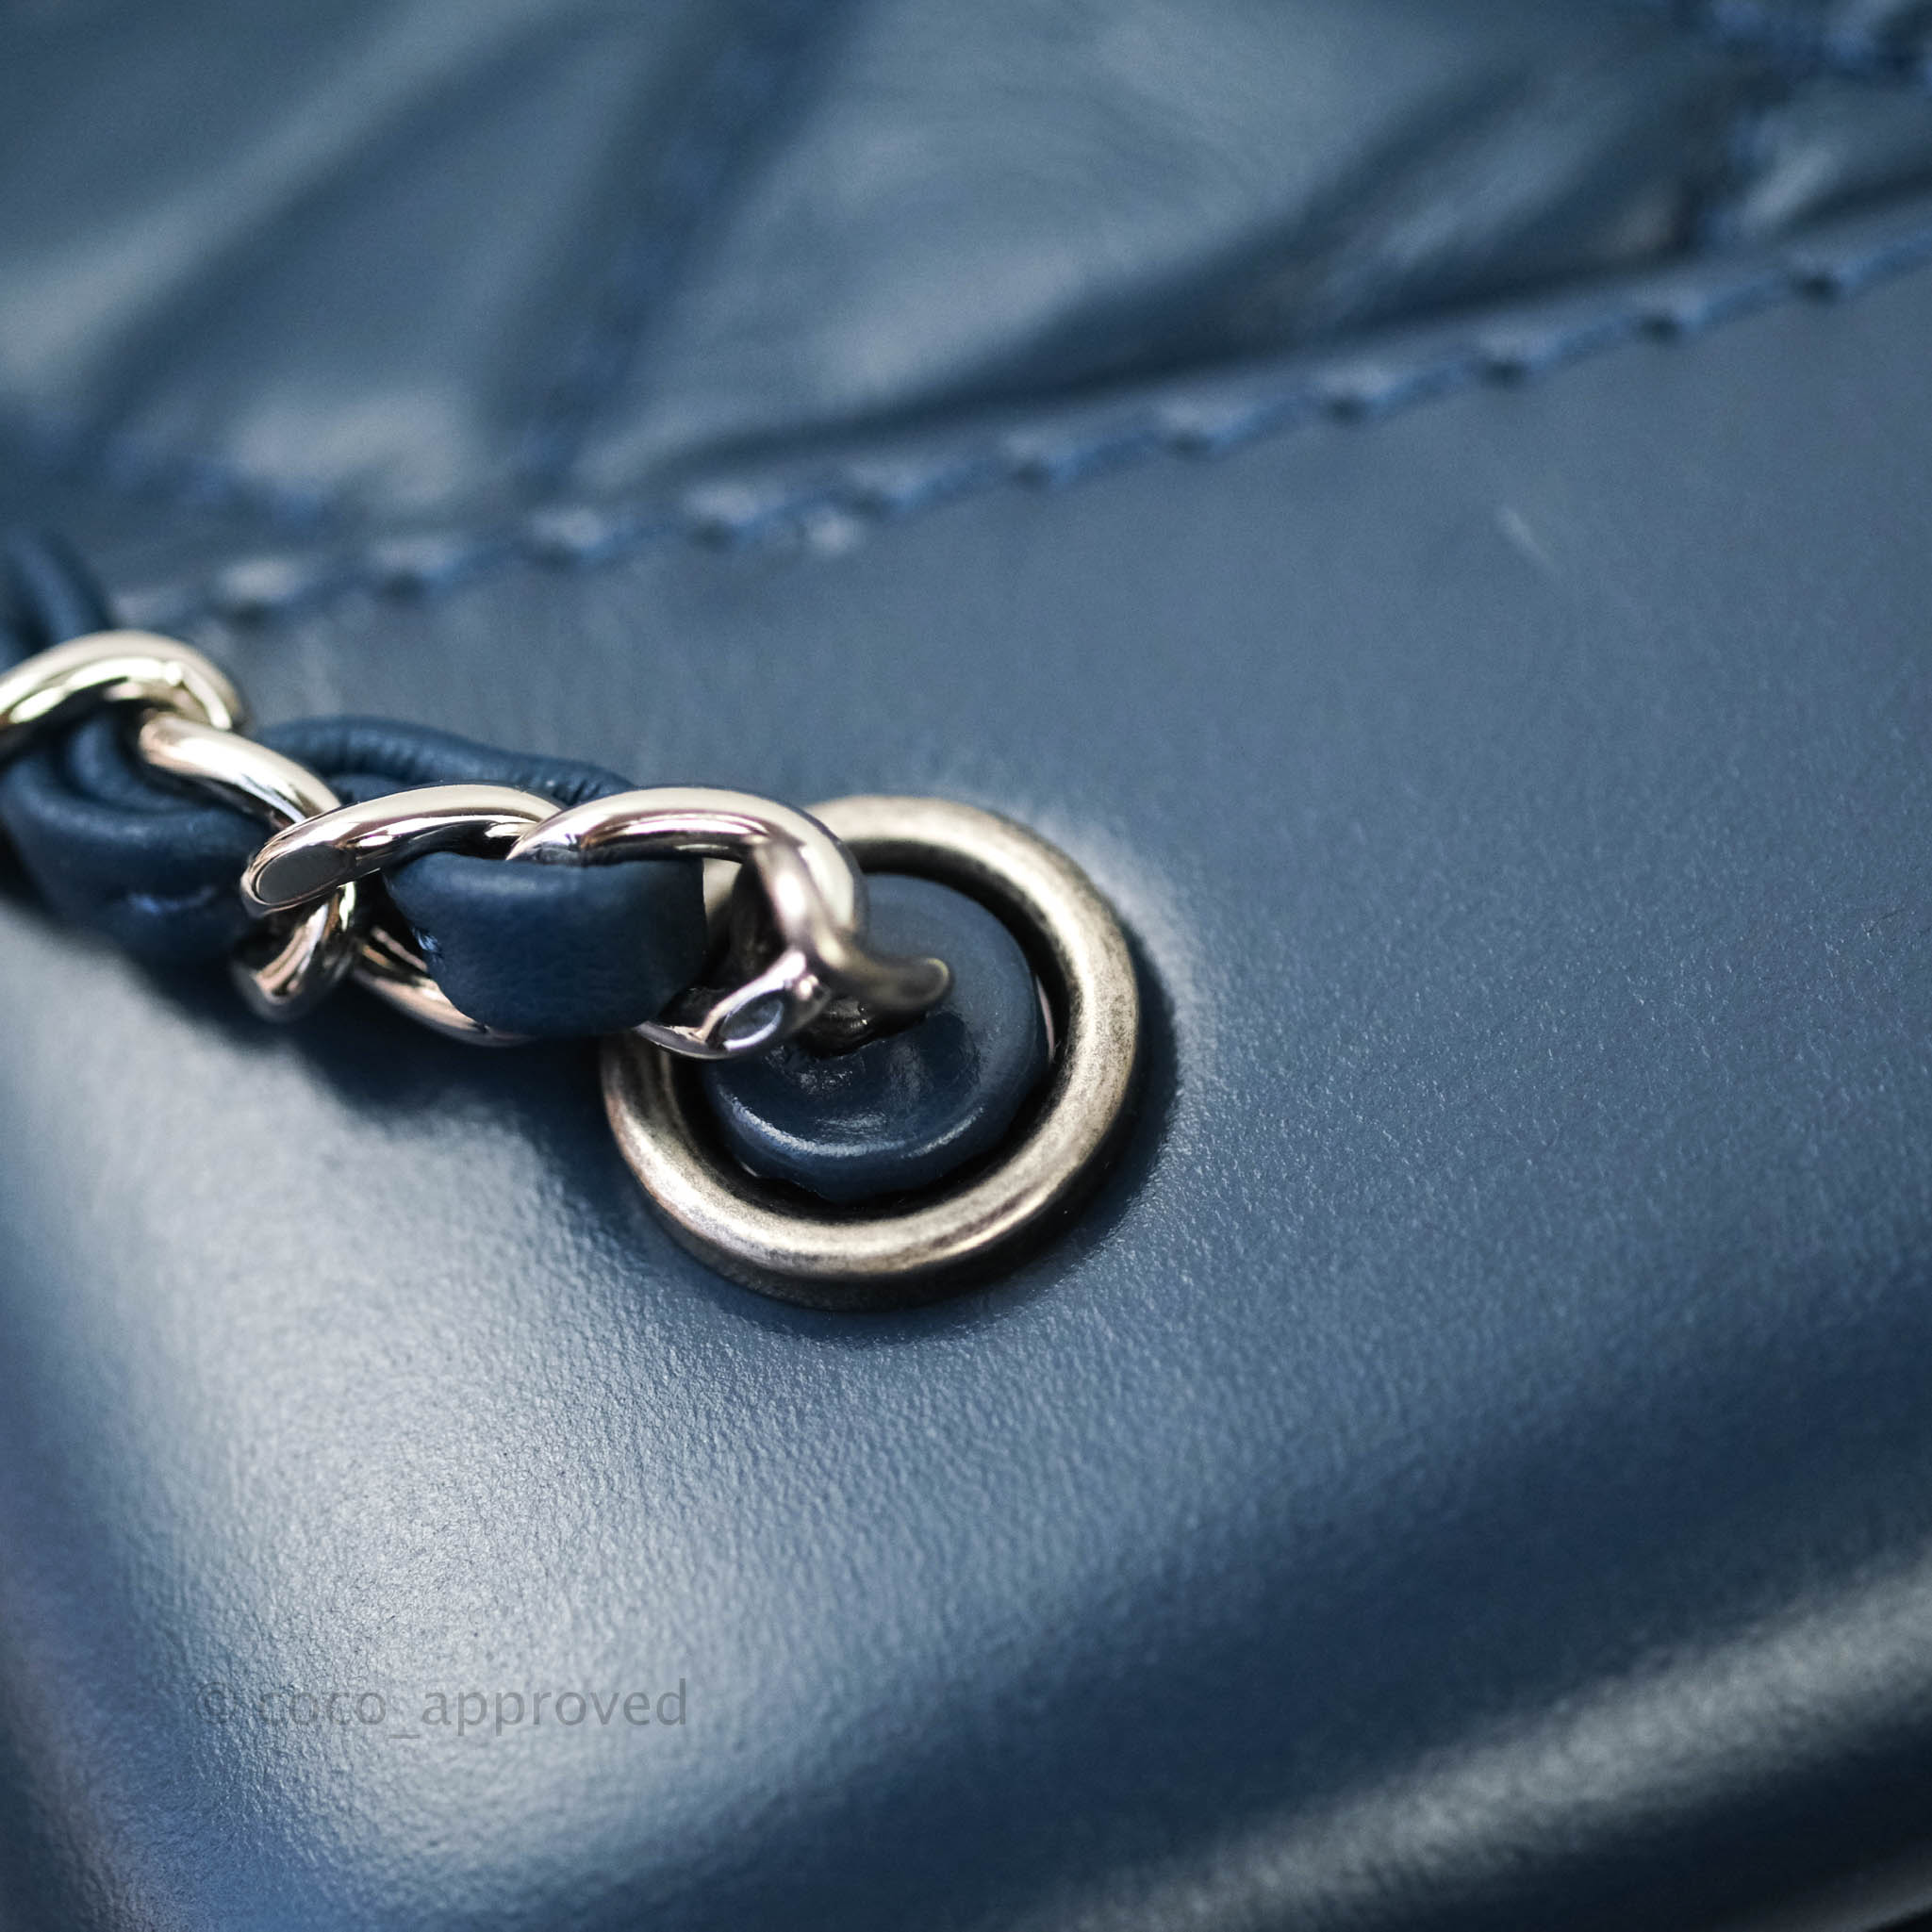 CC Blue Aged Calfskin Small Gabrielle Backpack JZC6074 – Vintage Sac